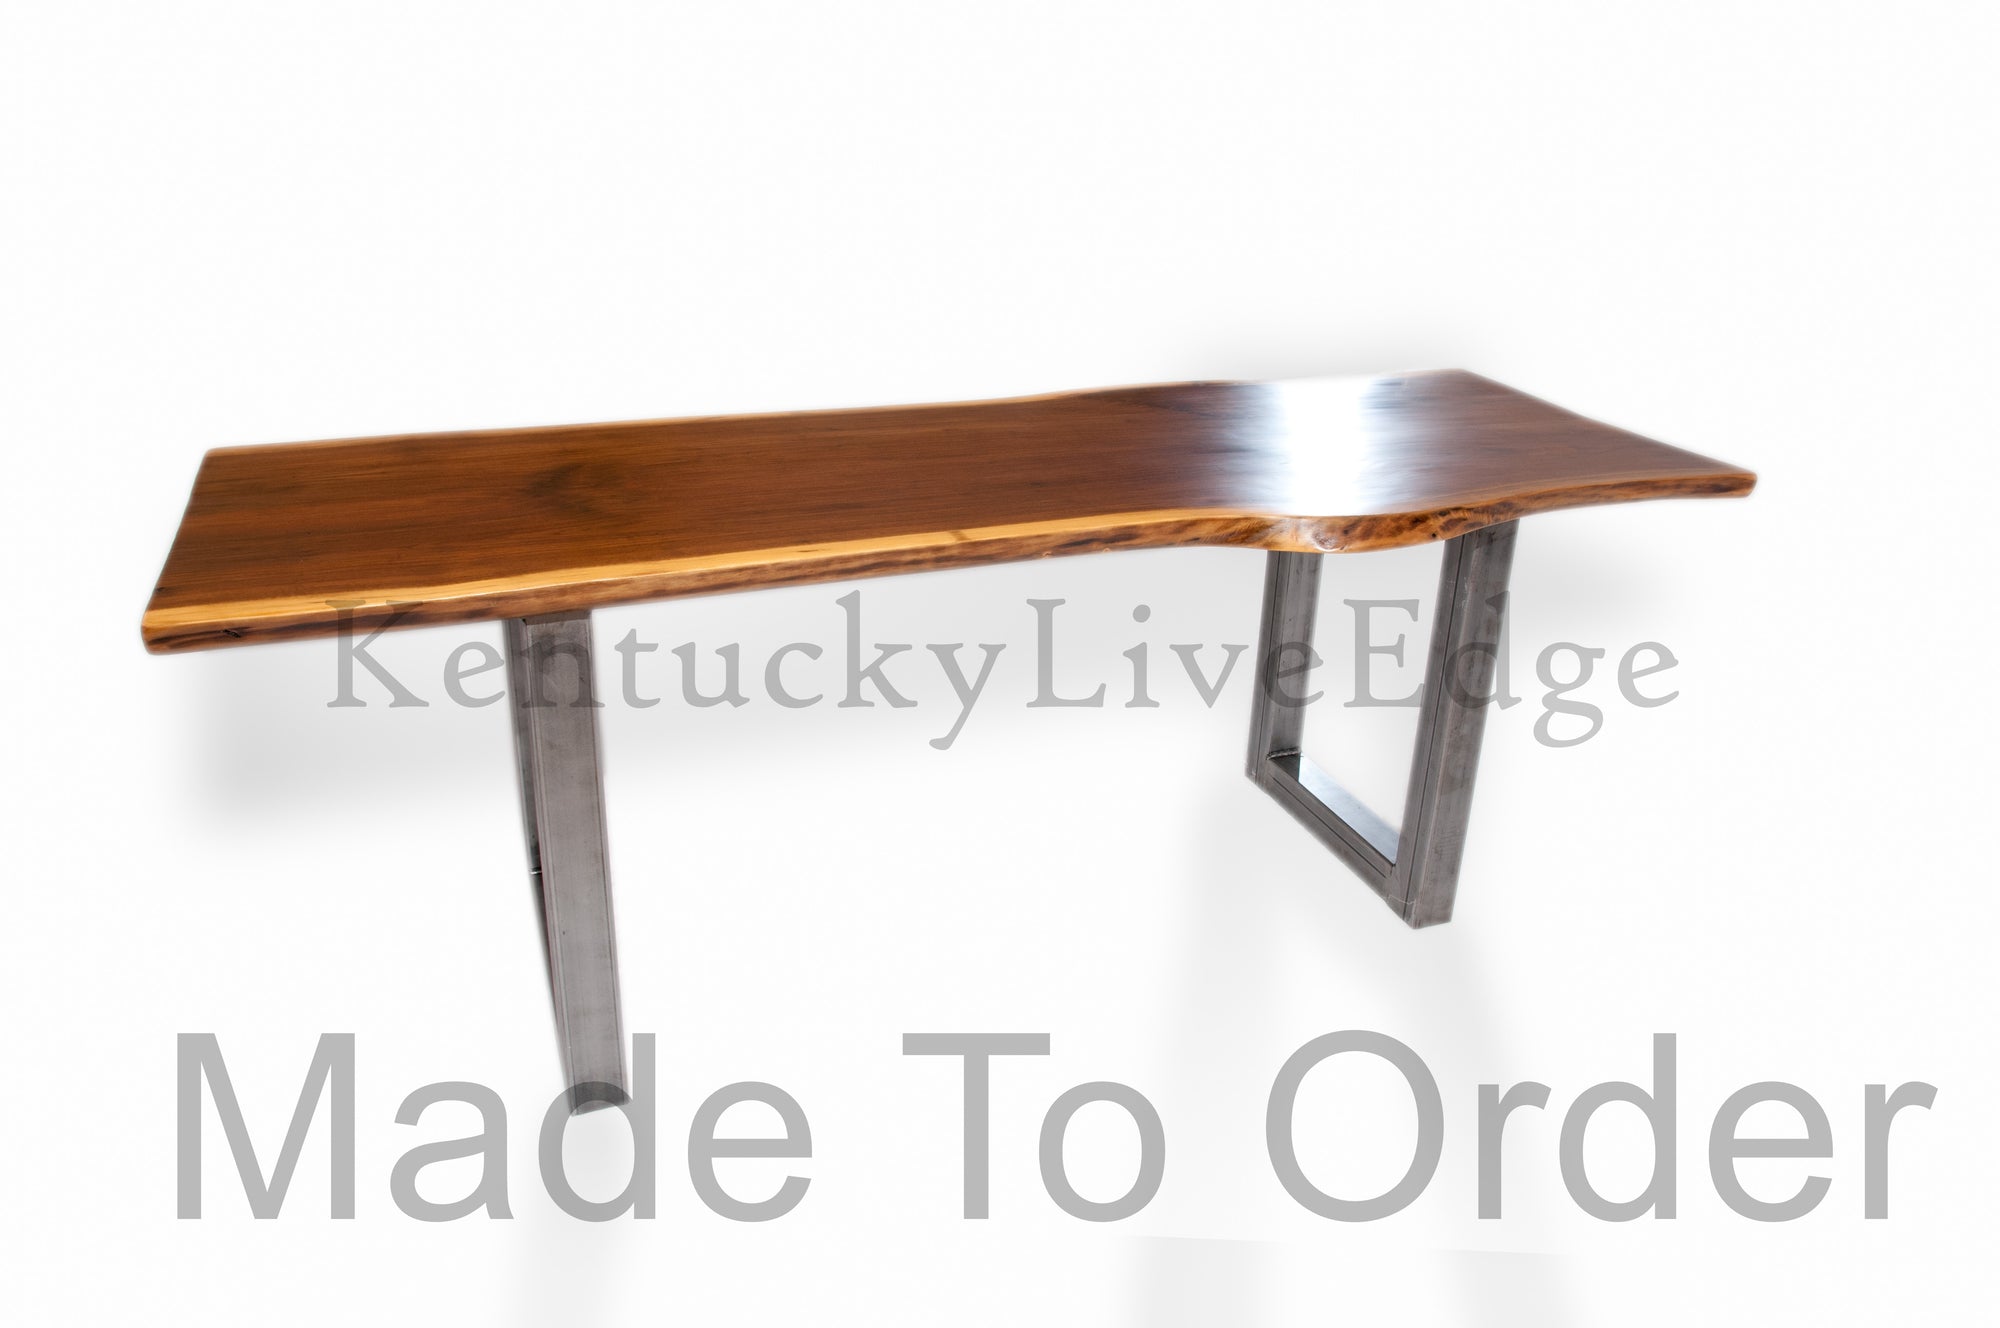 Made to Order Dining Table- Conference Table- Live Edge- Modern- Rustic- Hardwood- Urban Reclaim- Reclaimed Wood- Steel Legs- Custom